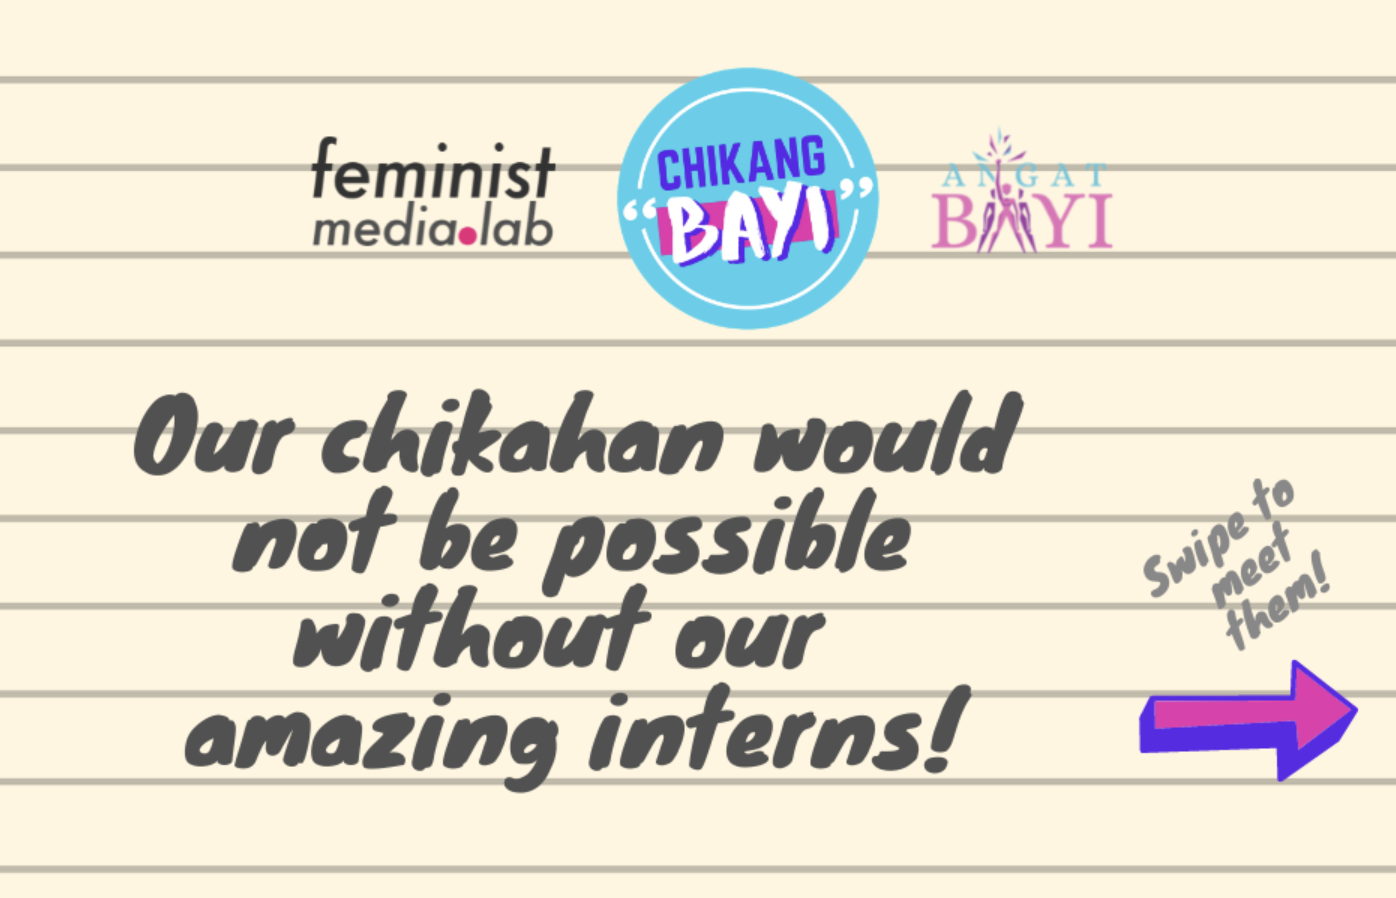 Media internship, feminist style